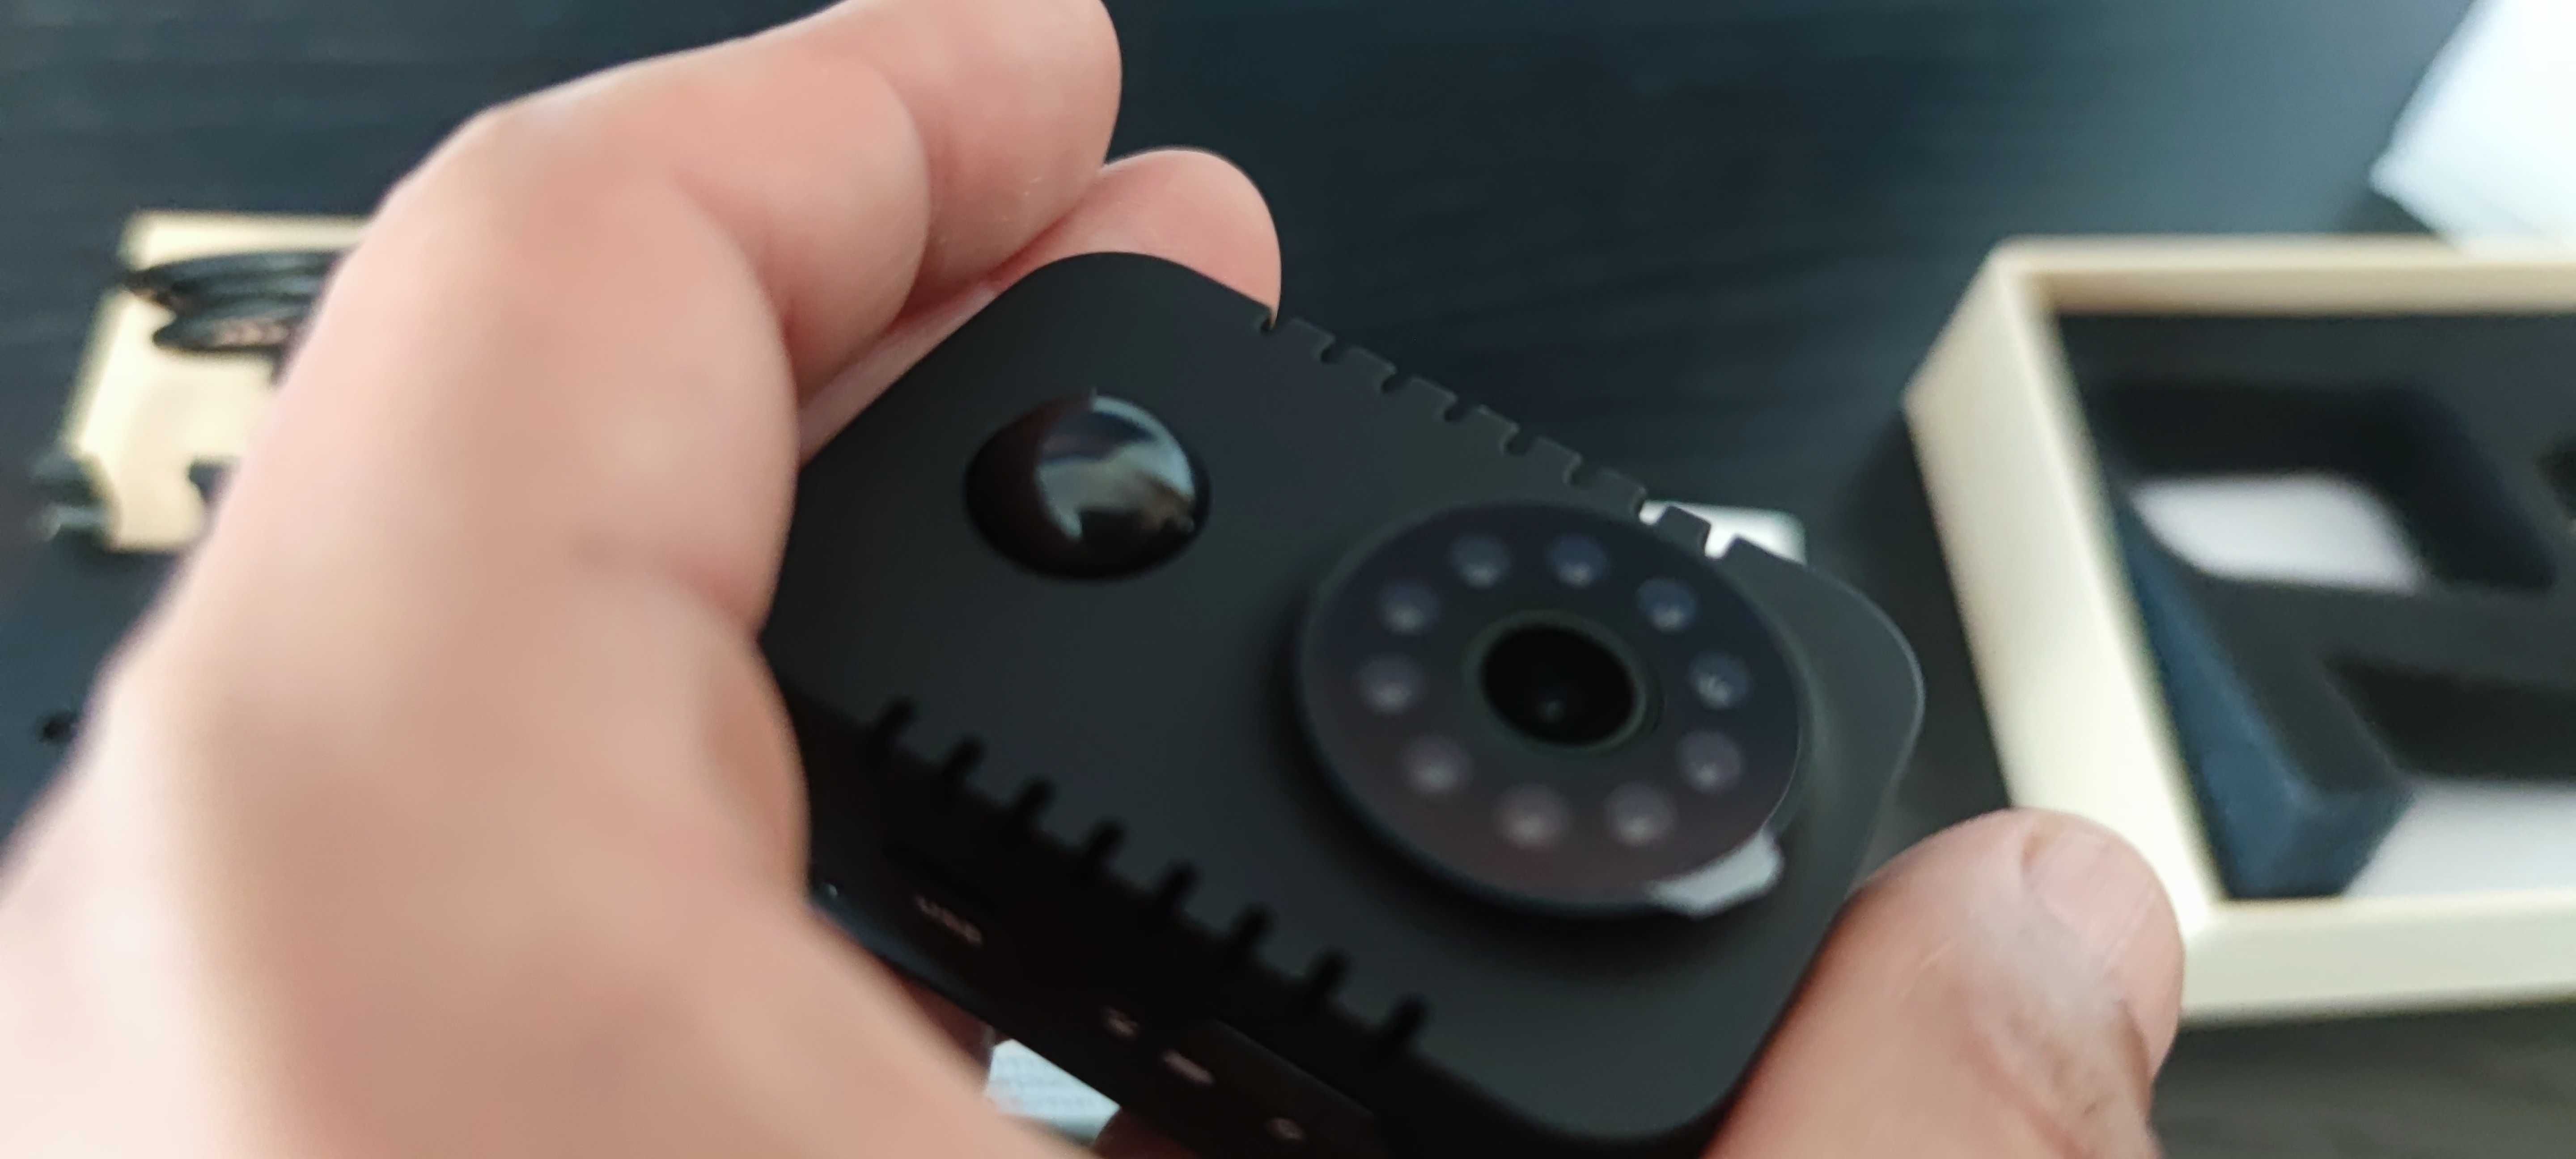 camera minuscula HD 1080p com sensor de movimento facil de trabalhar